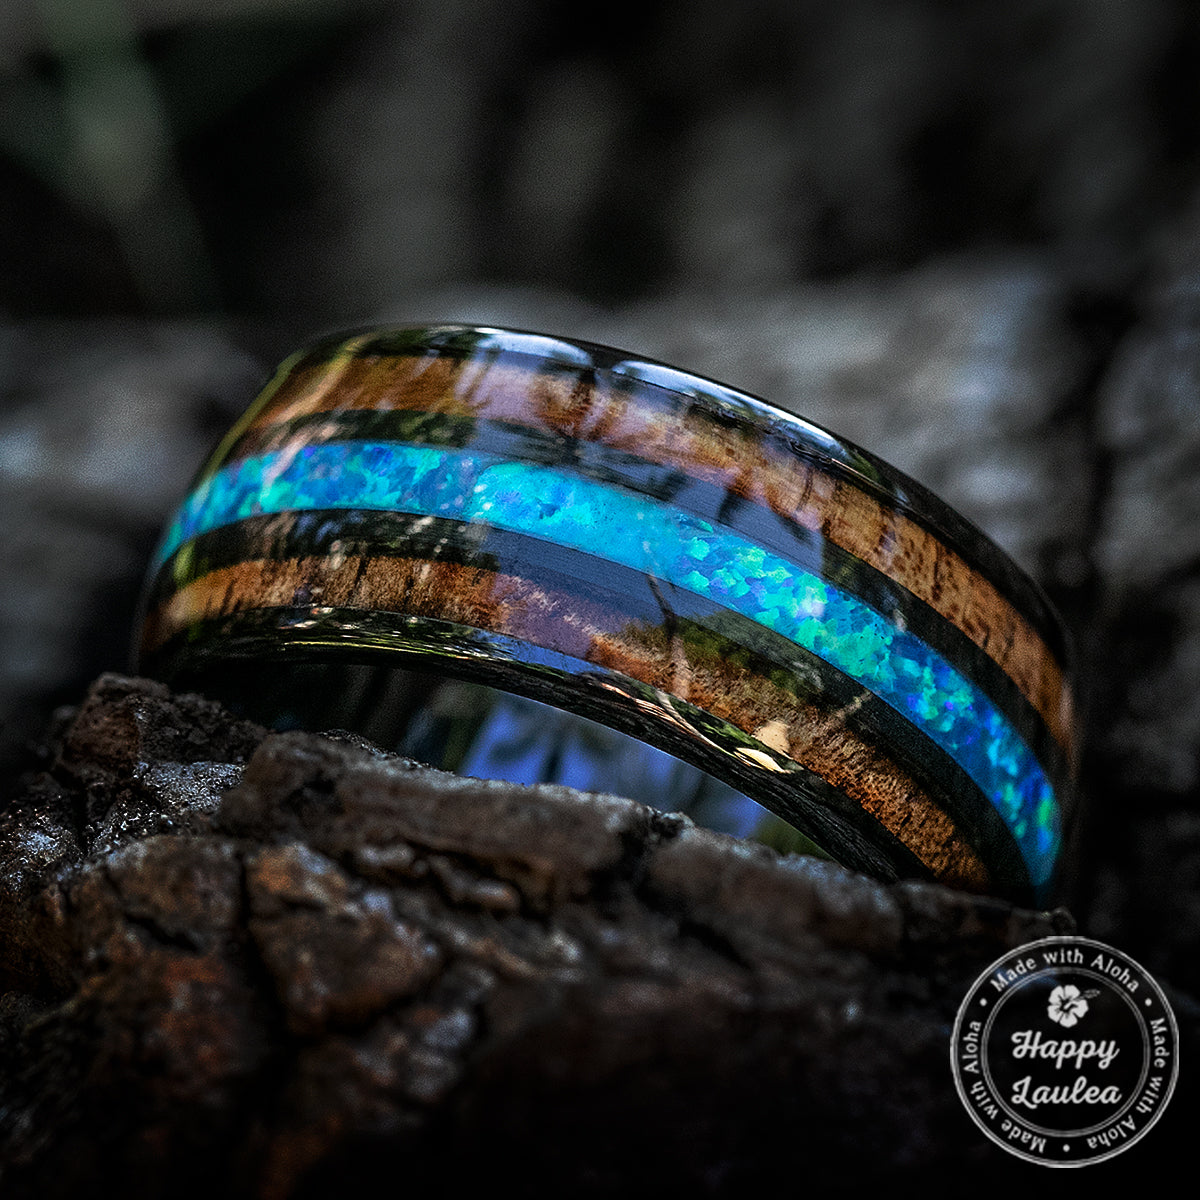 Black Ceramic 10mm Ring with Blue Opal & Hawaiian Koa Wood Tri Inlay - Dome Shape, Comfort Fitment